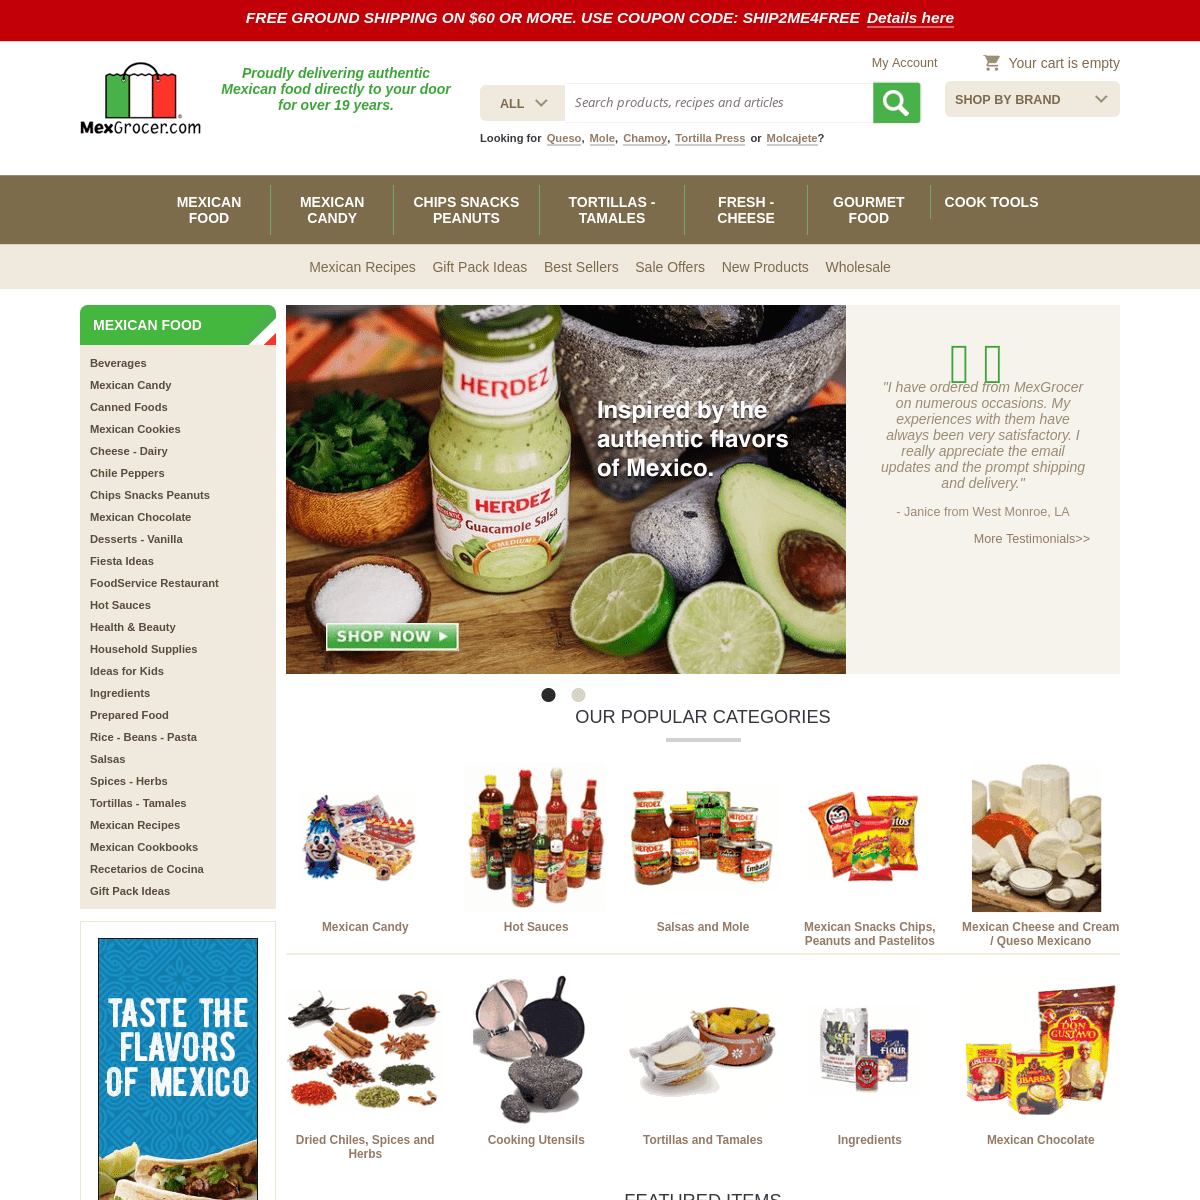 Mexican food and Mexican recipes at MexGrocer.com